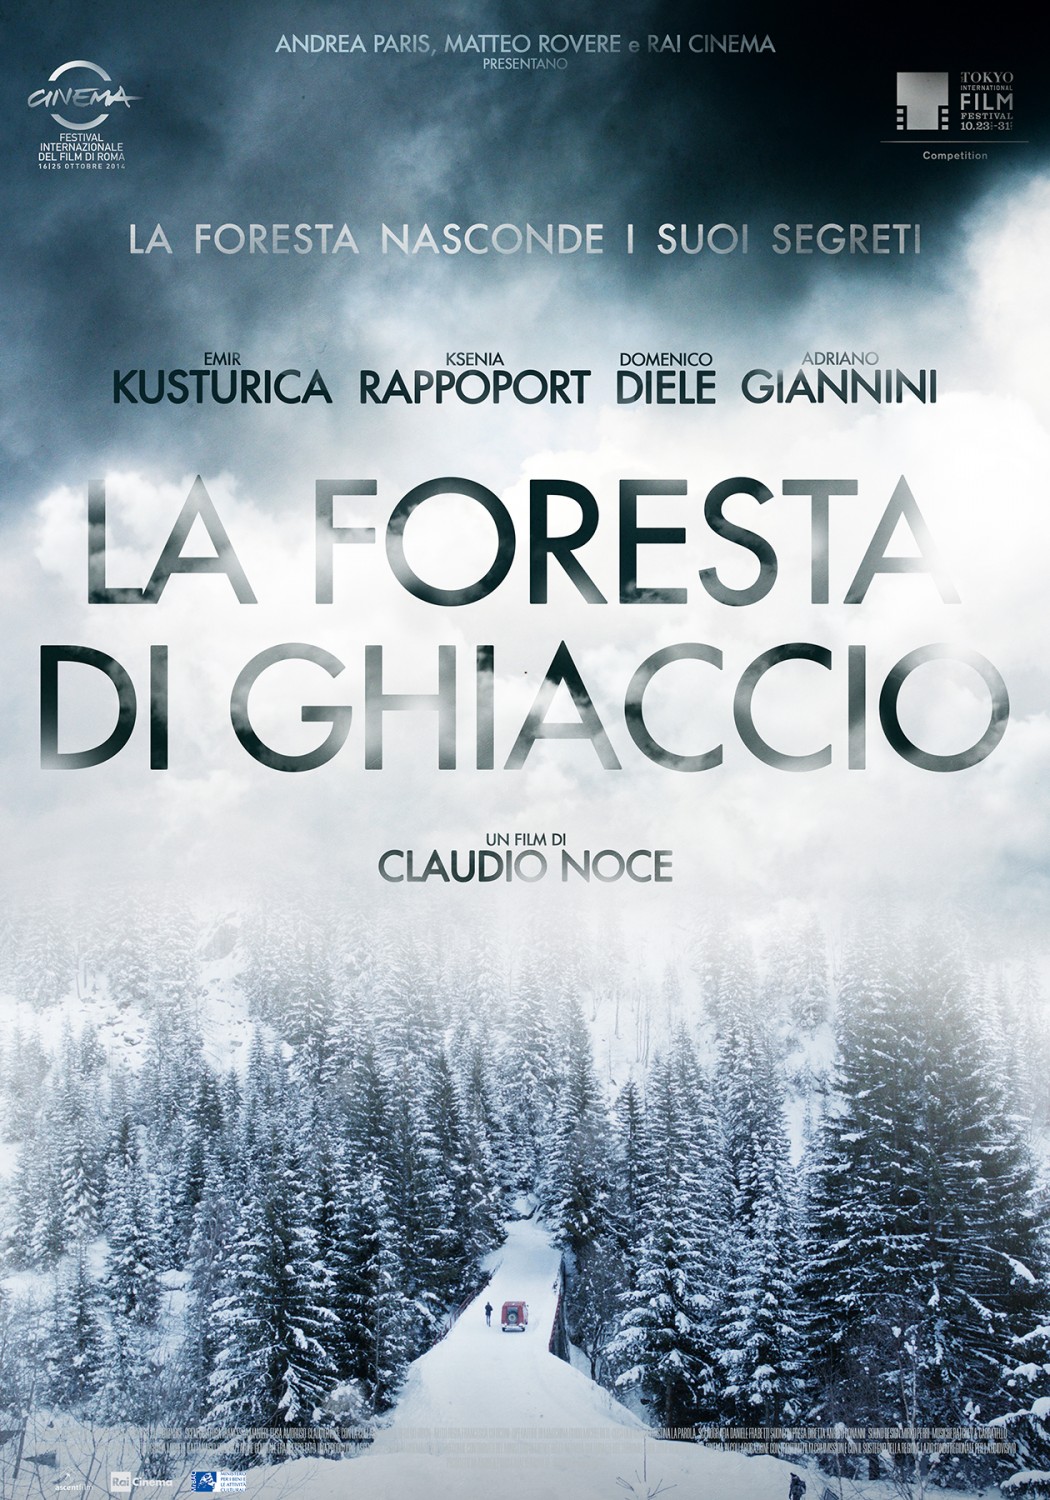 Extra Large Movie Poster Image for La foresta di ghiaccio (#2 of 2)